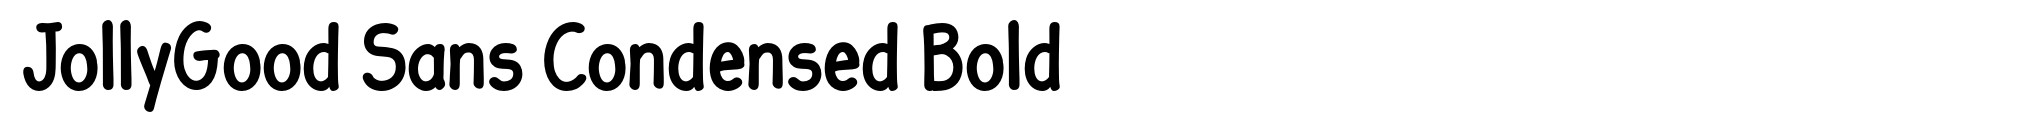 JollyGood Sans Condensed Bold image